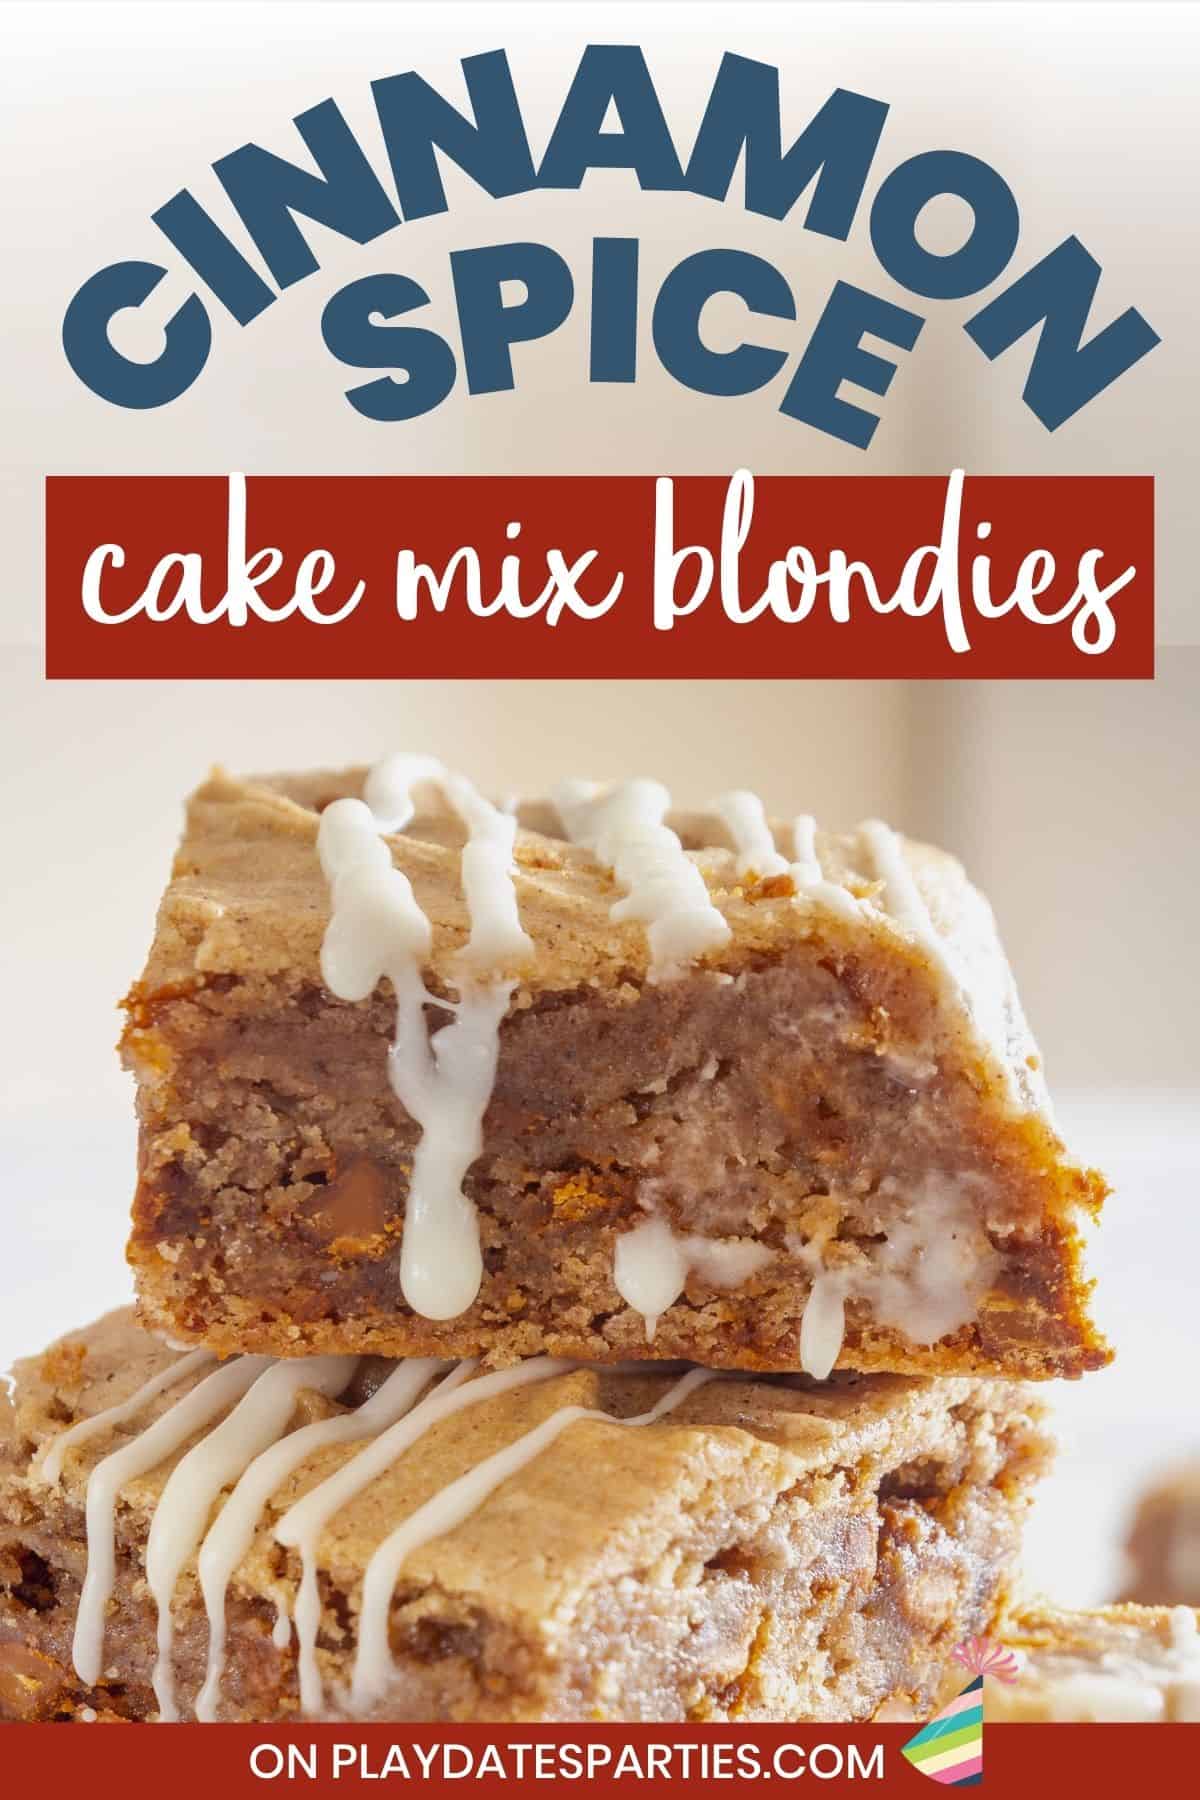 Cinnamon spice cake mix blondies pin image.